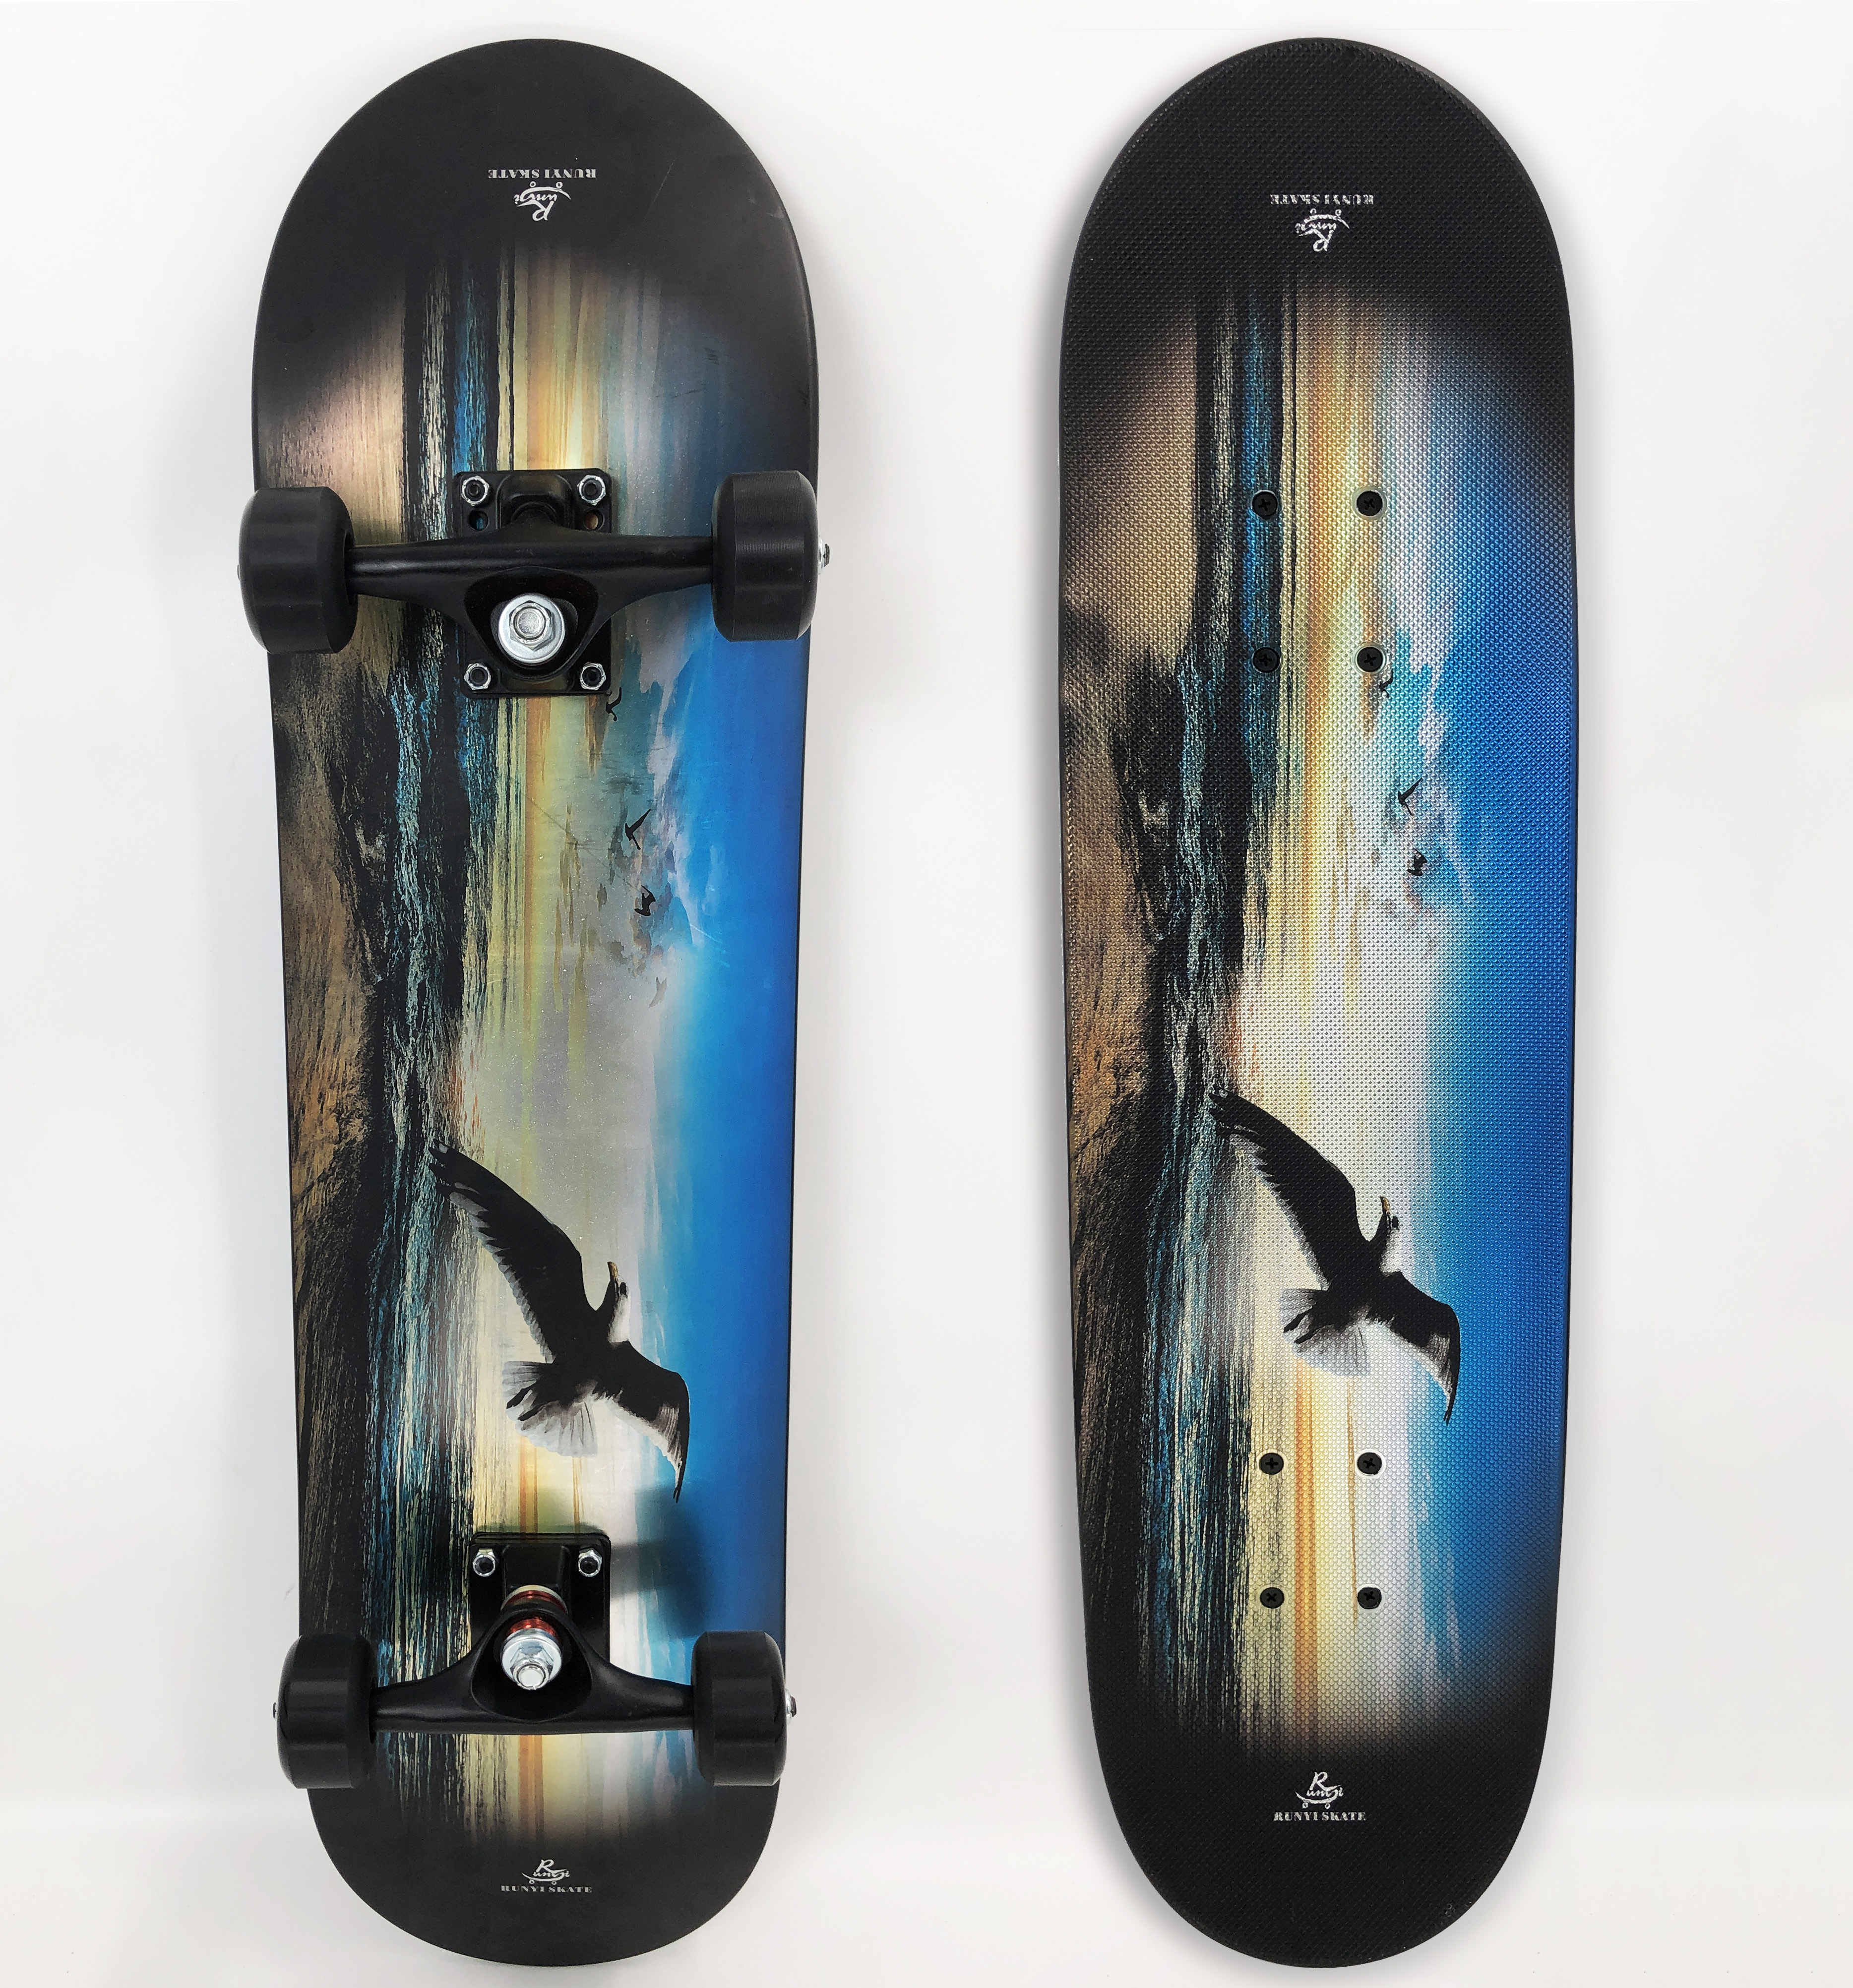 31" Skateboard with Unique Moulding Design (GS-SB-XD04)